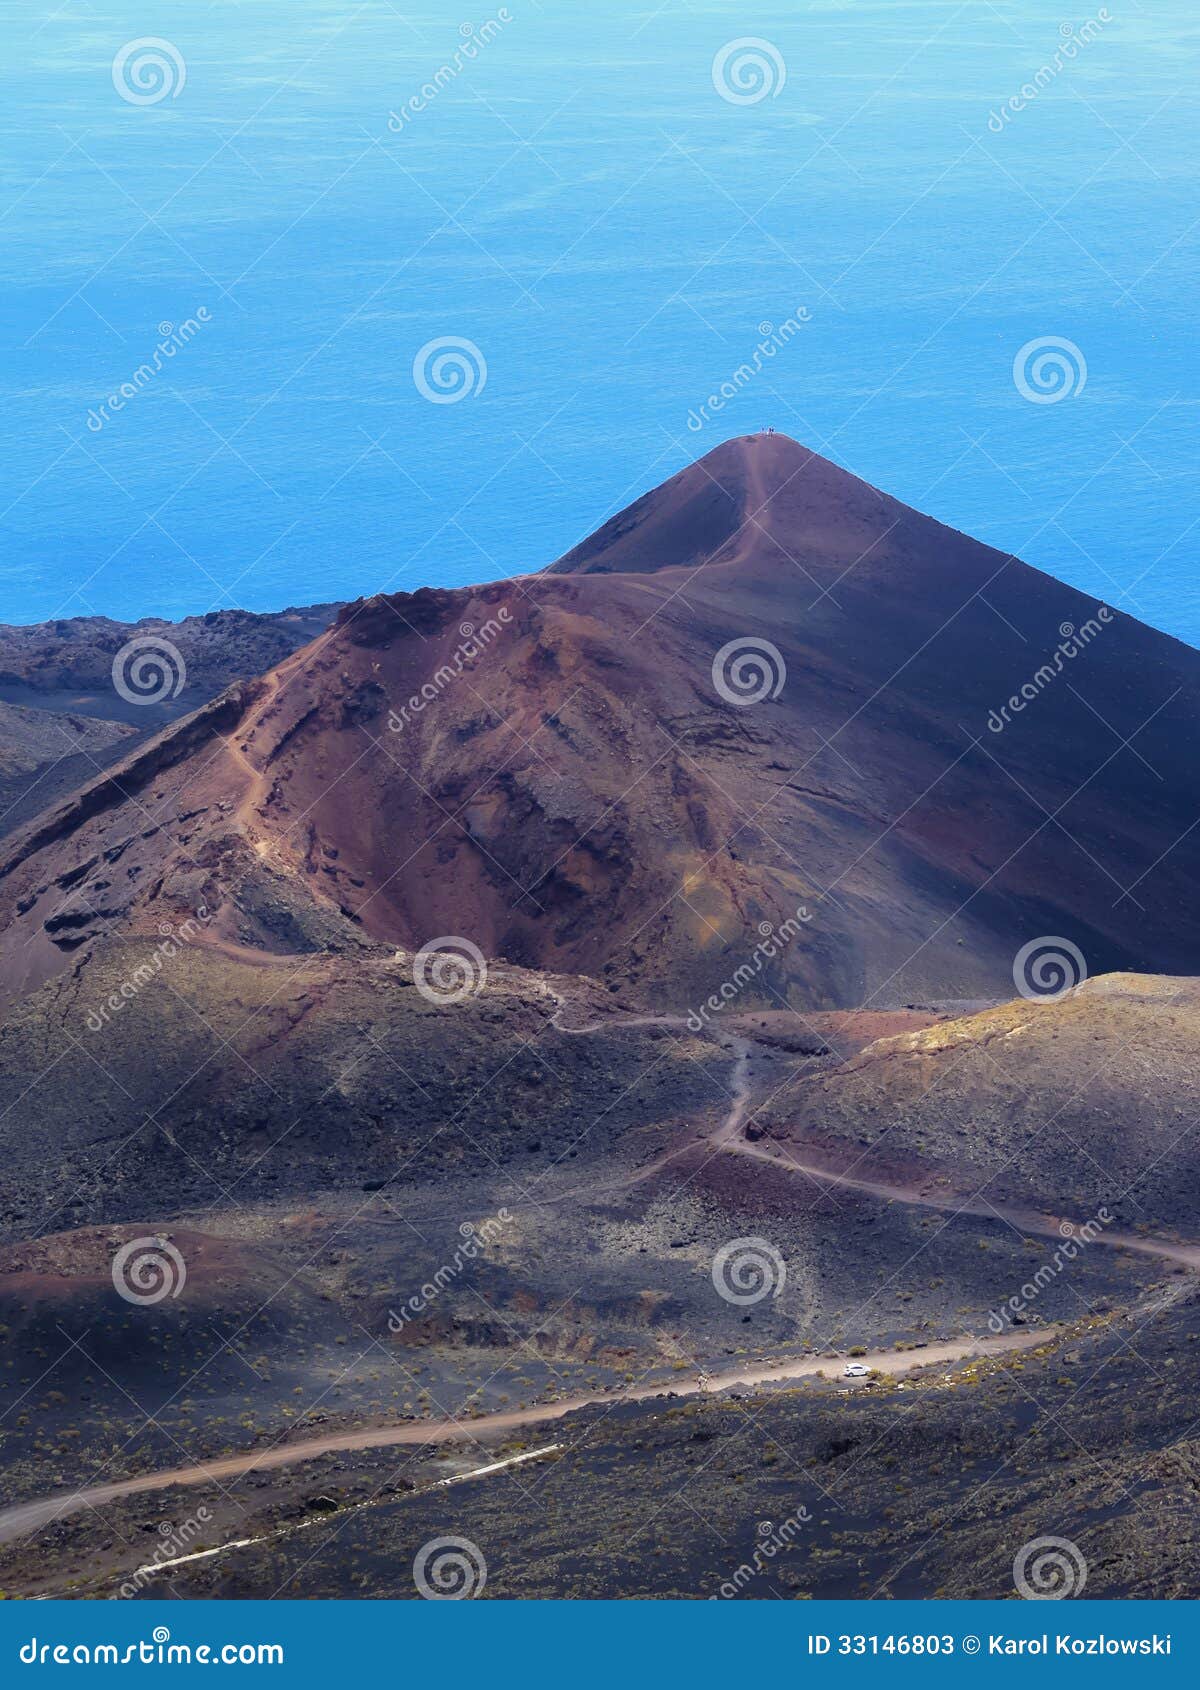 teneguia volcano and fuencaliente volcanic landscape on la palma